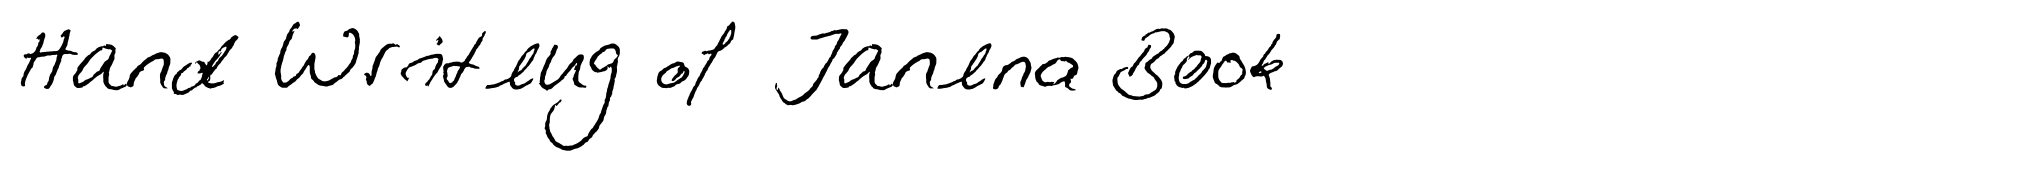 Hand Writing of Janina Book image